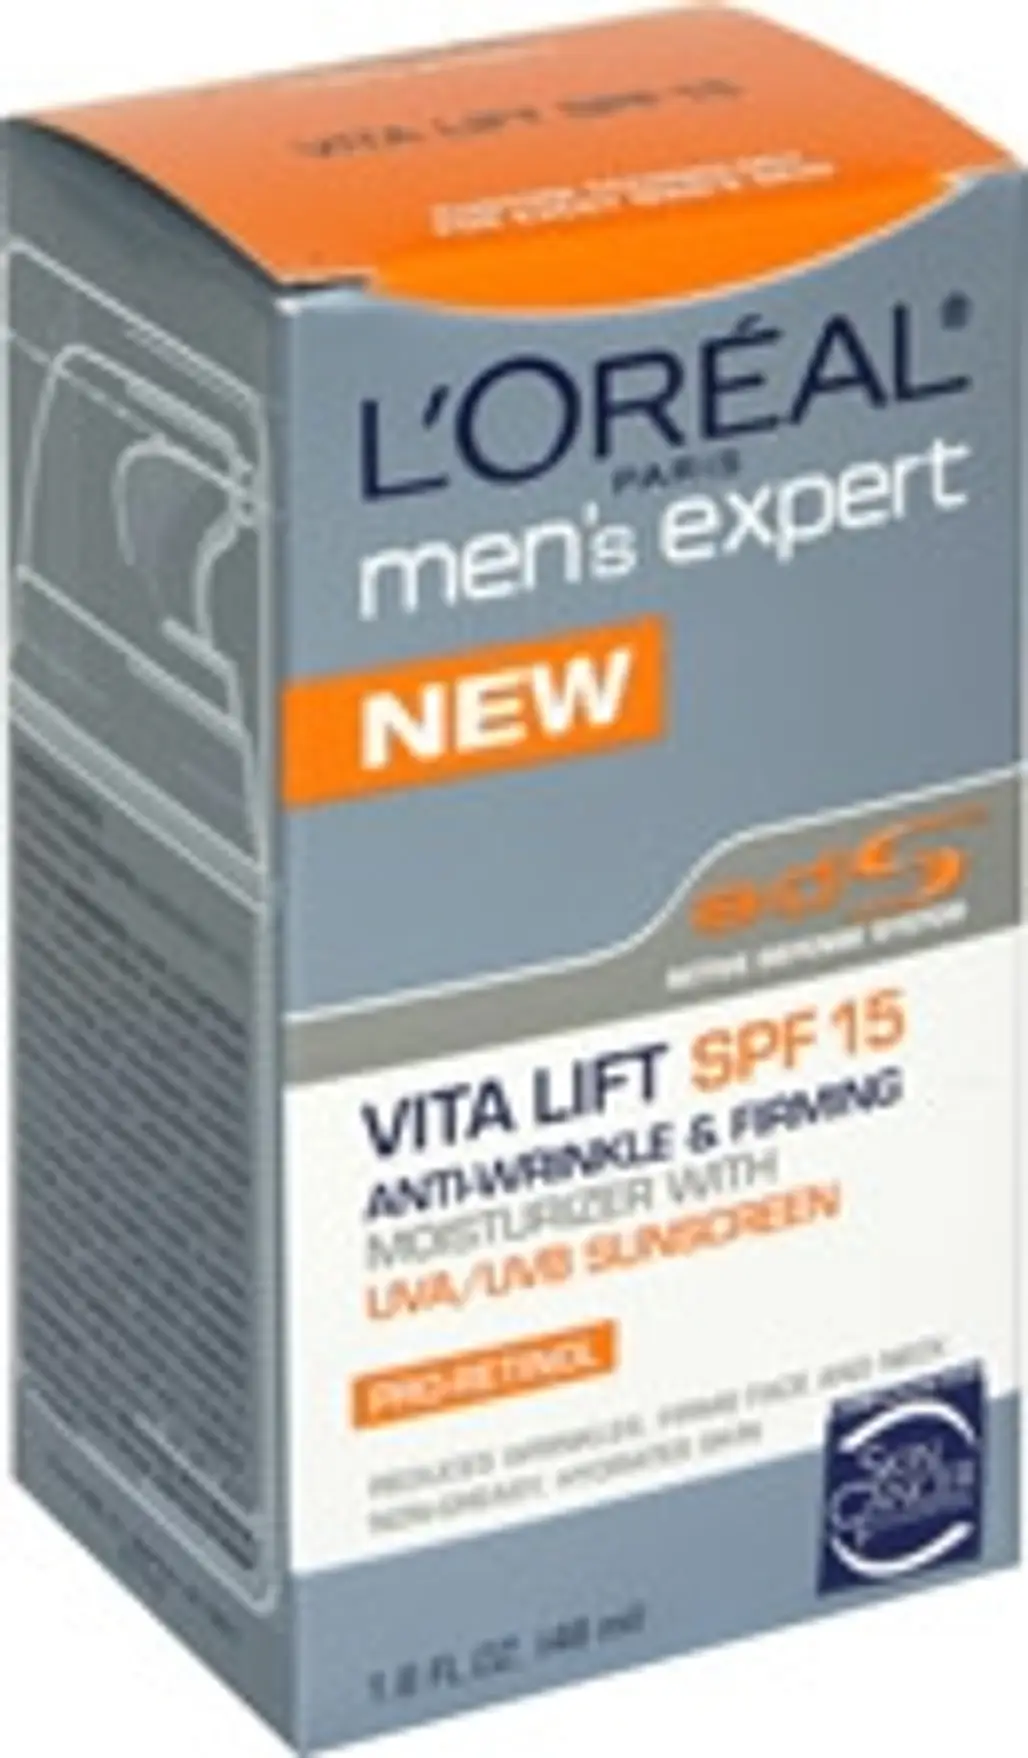 L'Oreal Men's Expert Vita Lift anti-Wrinkle and Firming Moisturizer SPF 15